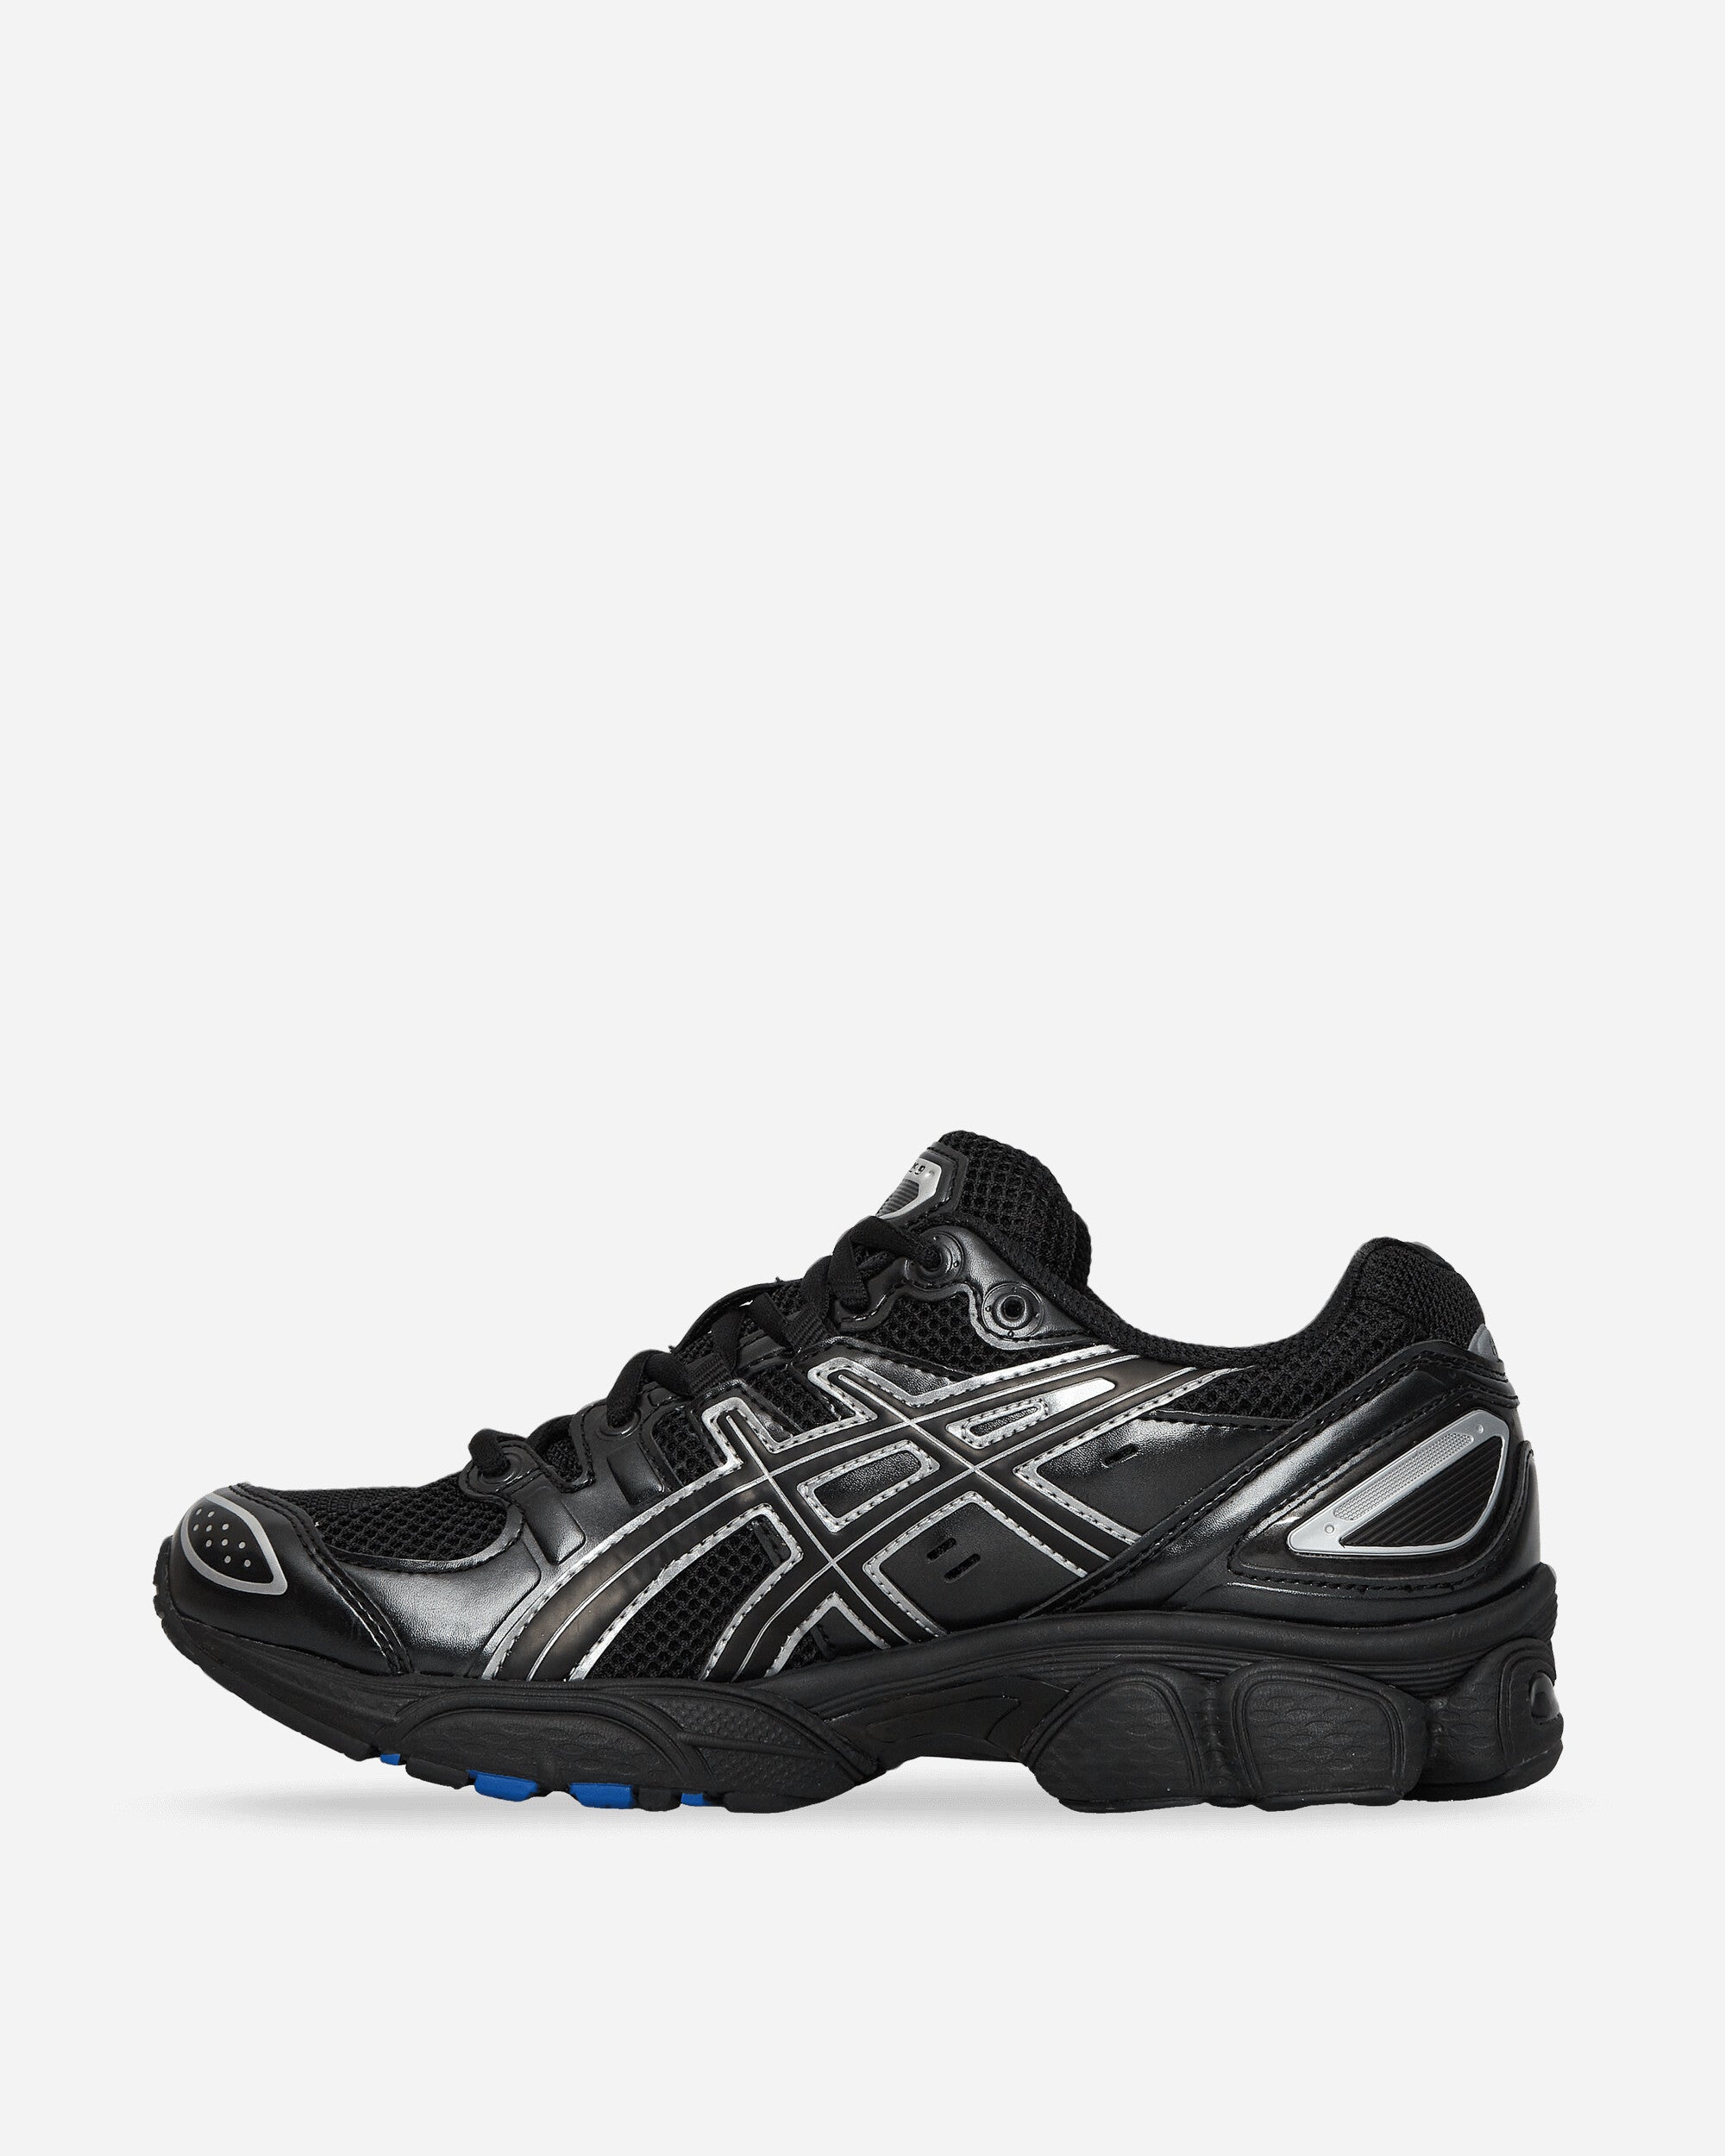 Asics Gel-Nimbus 9 Black/Pure Silver Sneakers Low 1201A424-005